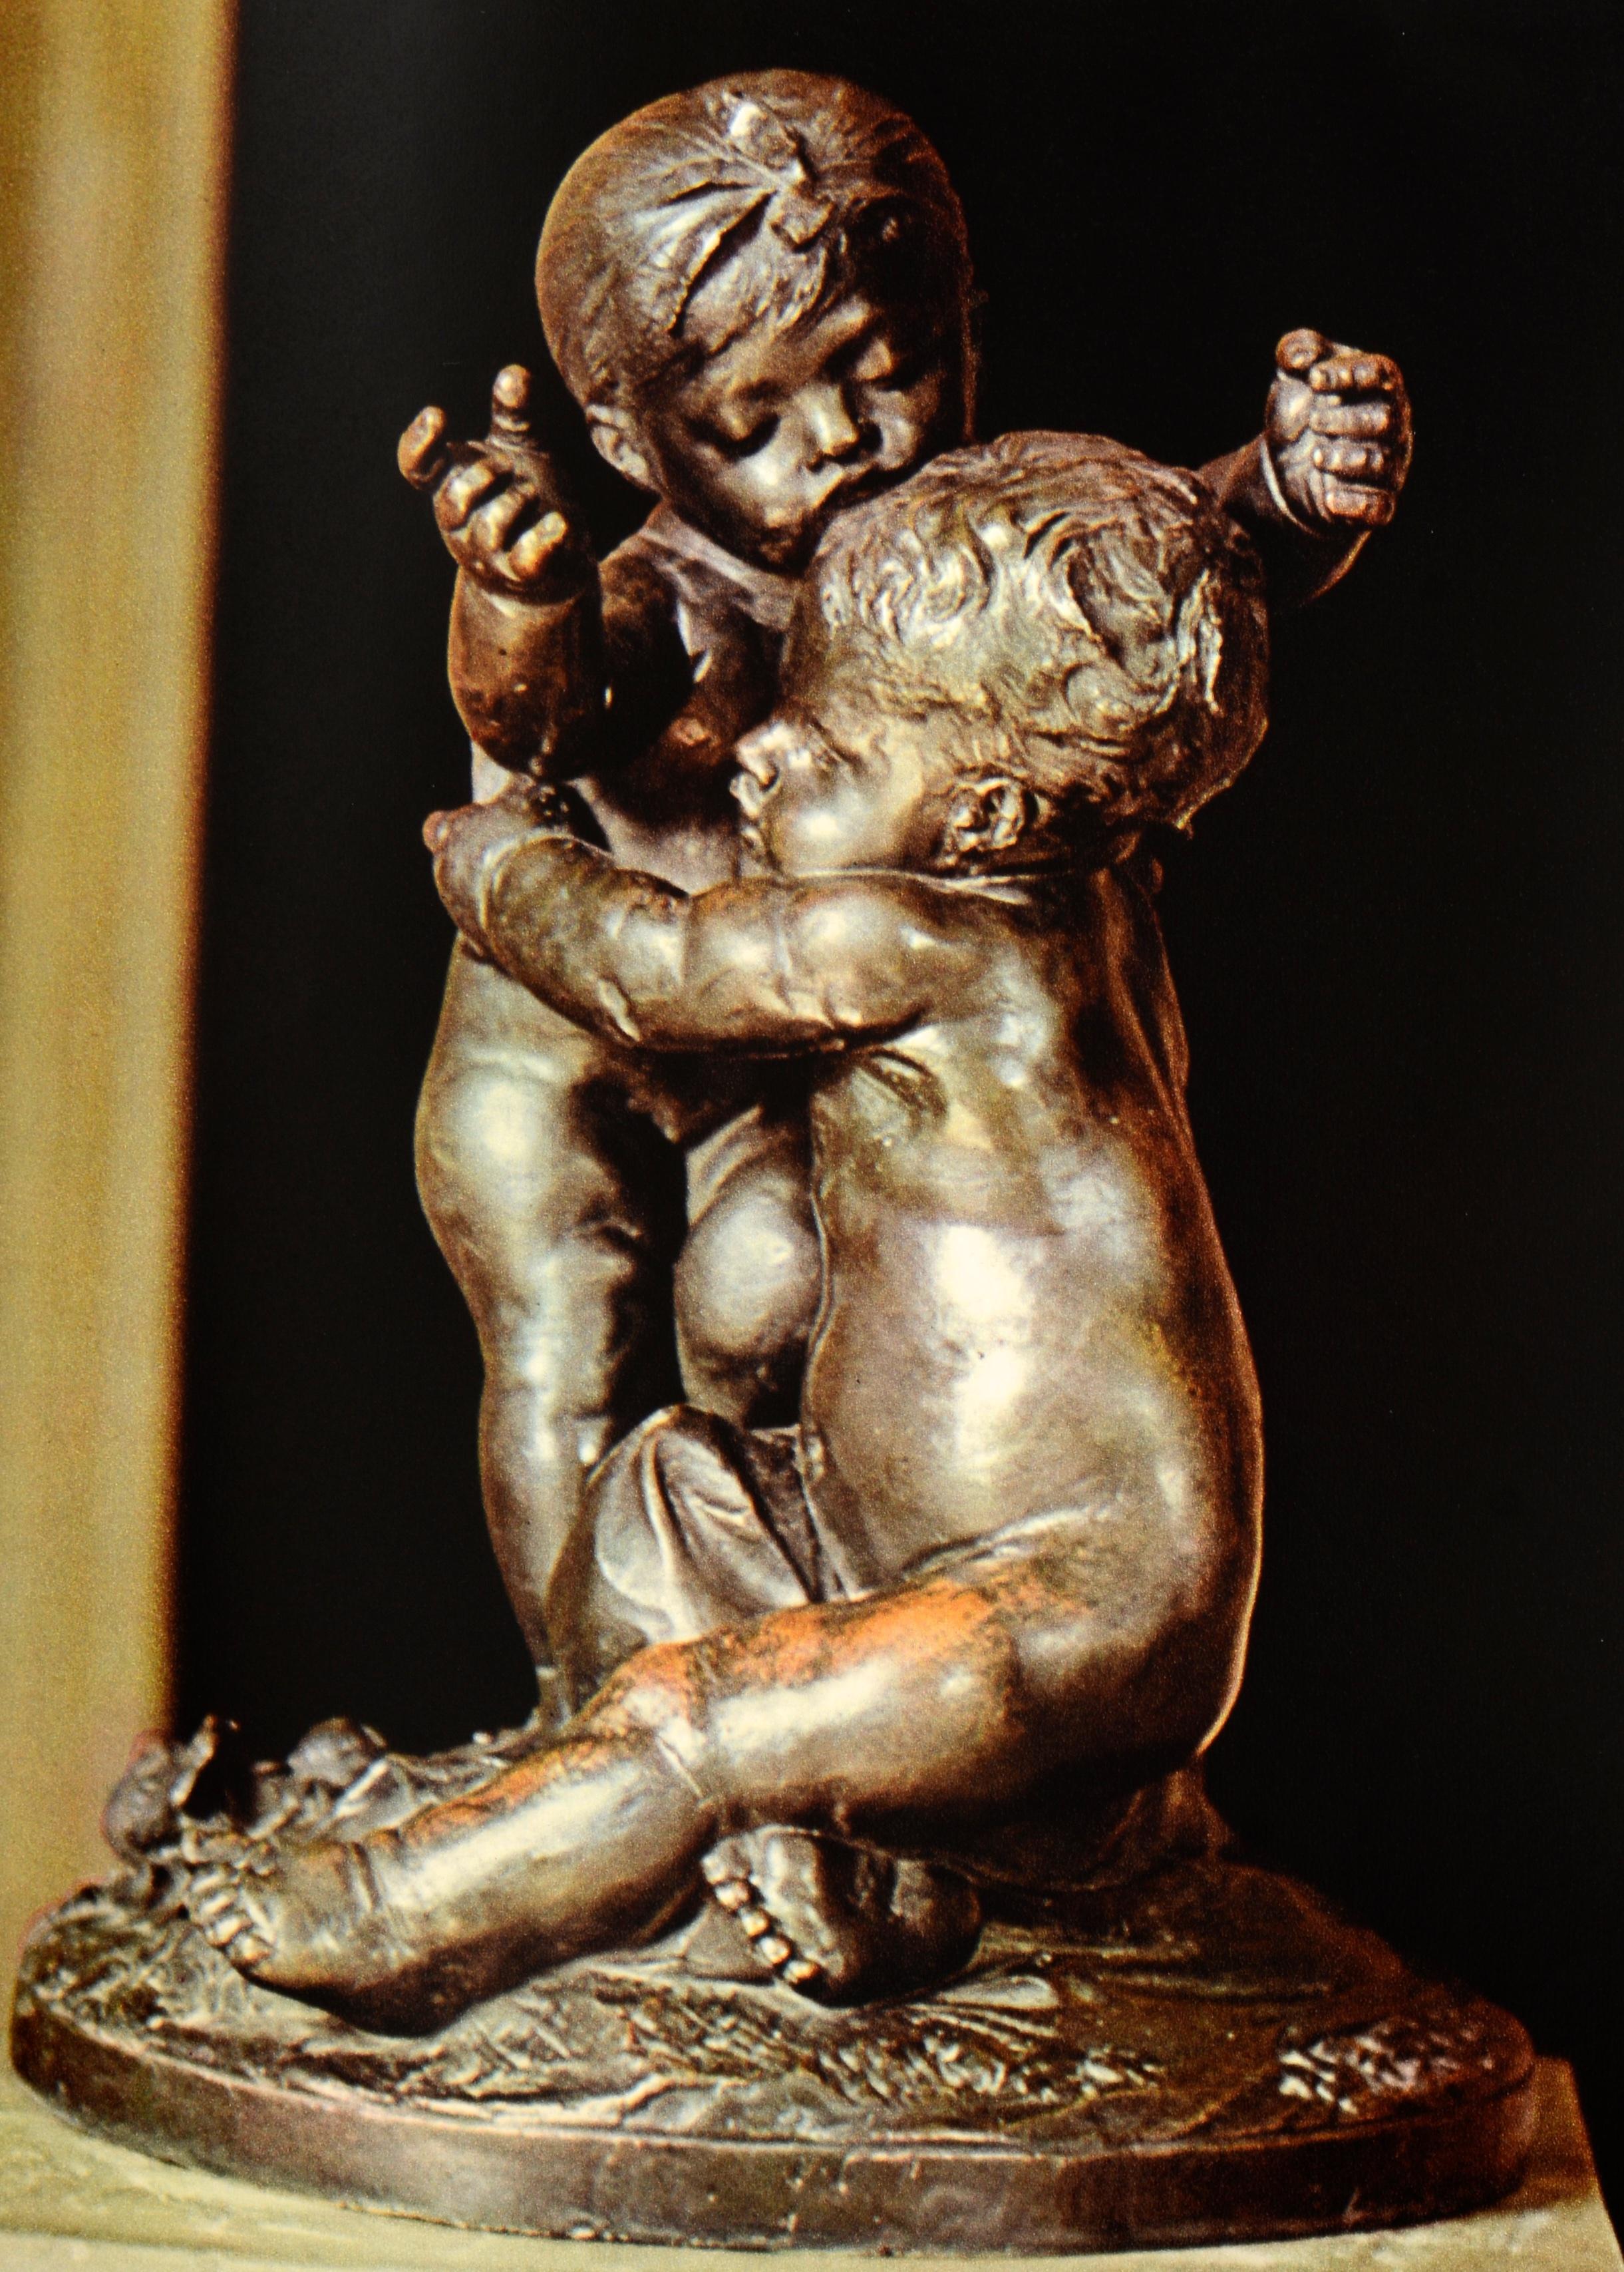 Rodin by Robert Descharnes and Jean-François Chabrun, First Edition 6